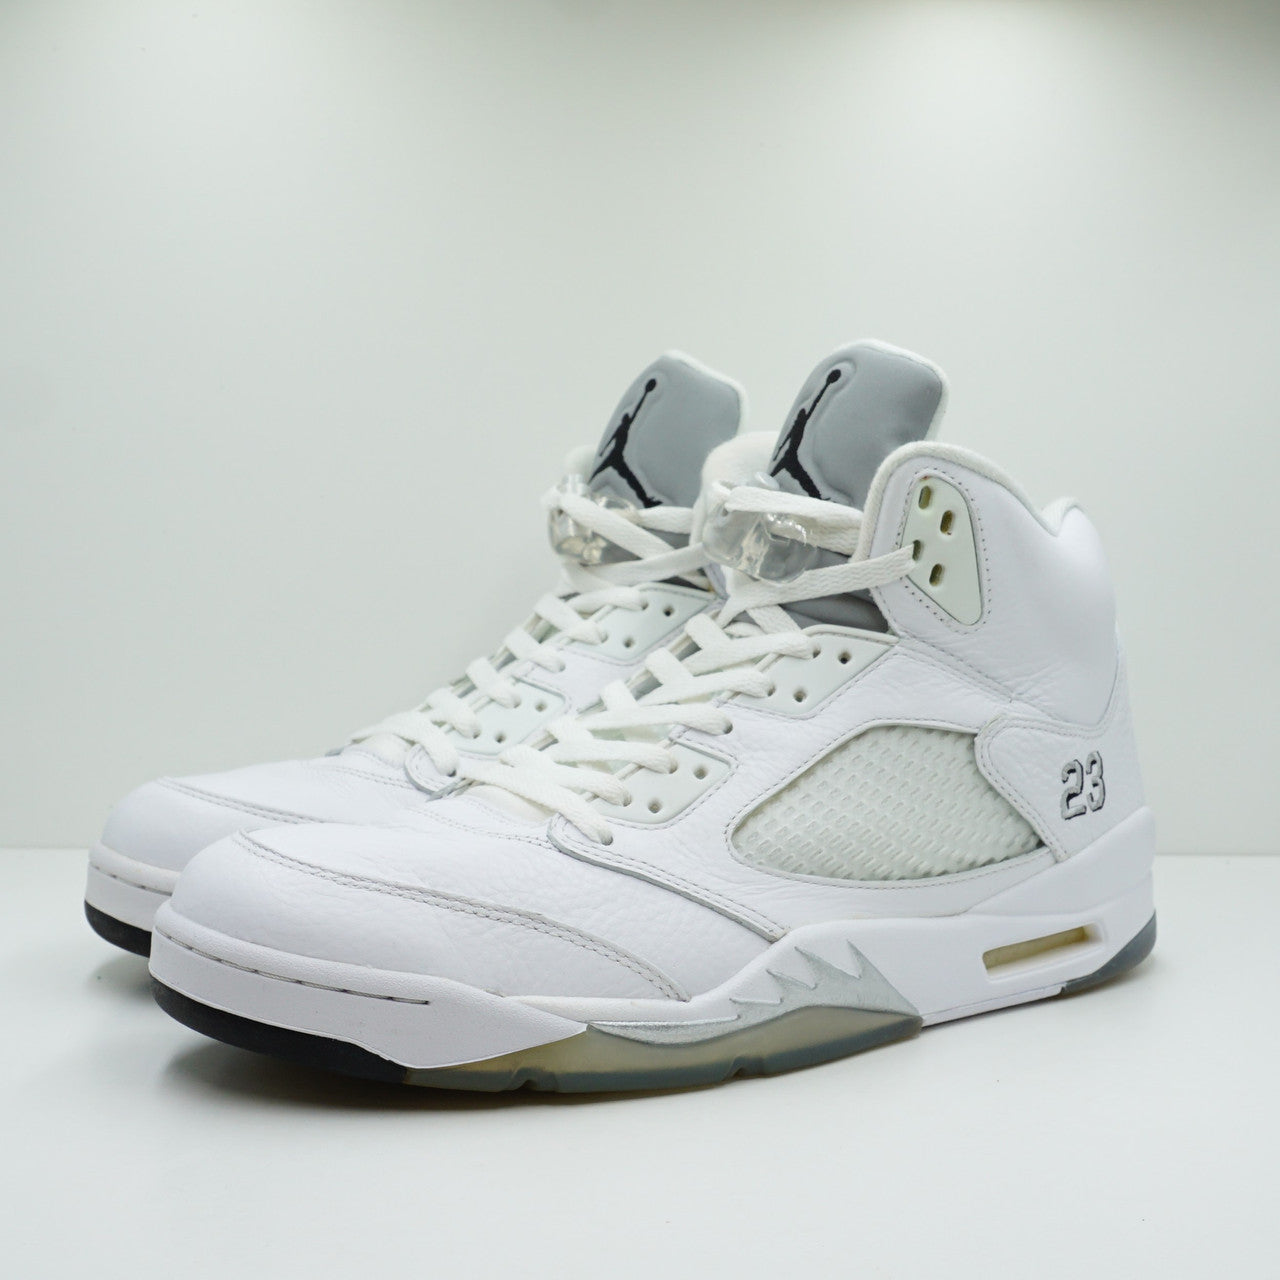 Jordan 5 Retro Metallic White  (2015)